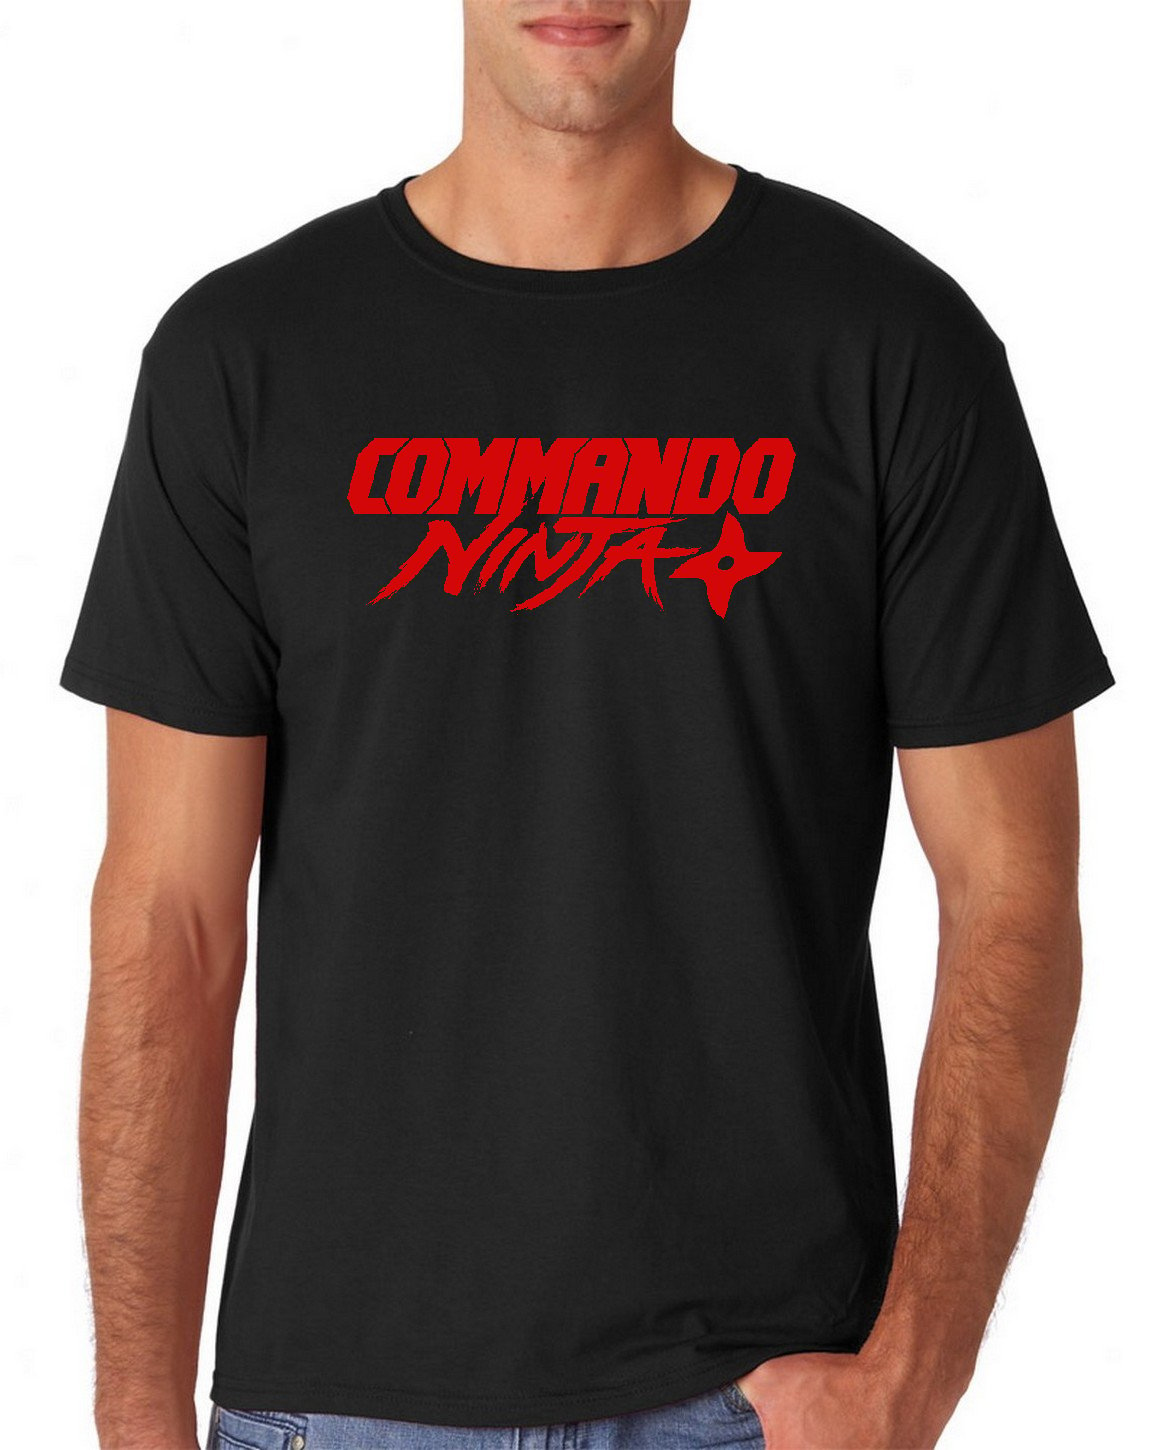 Commando Ninja Black Tee Shirt | COMMANDO NINJA STORE